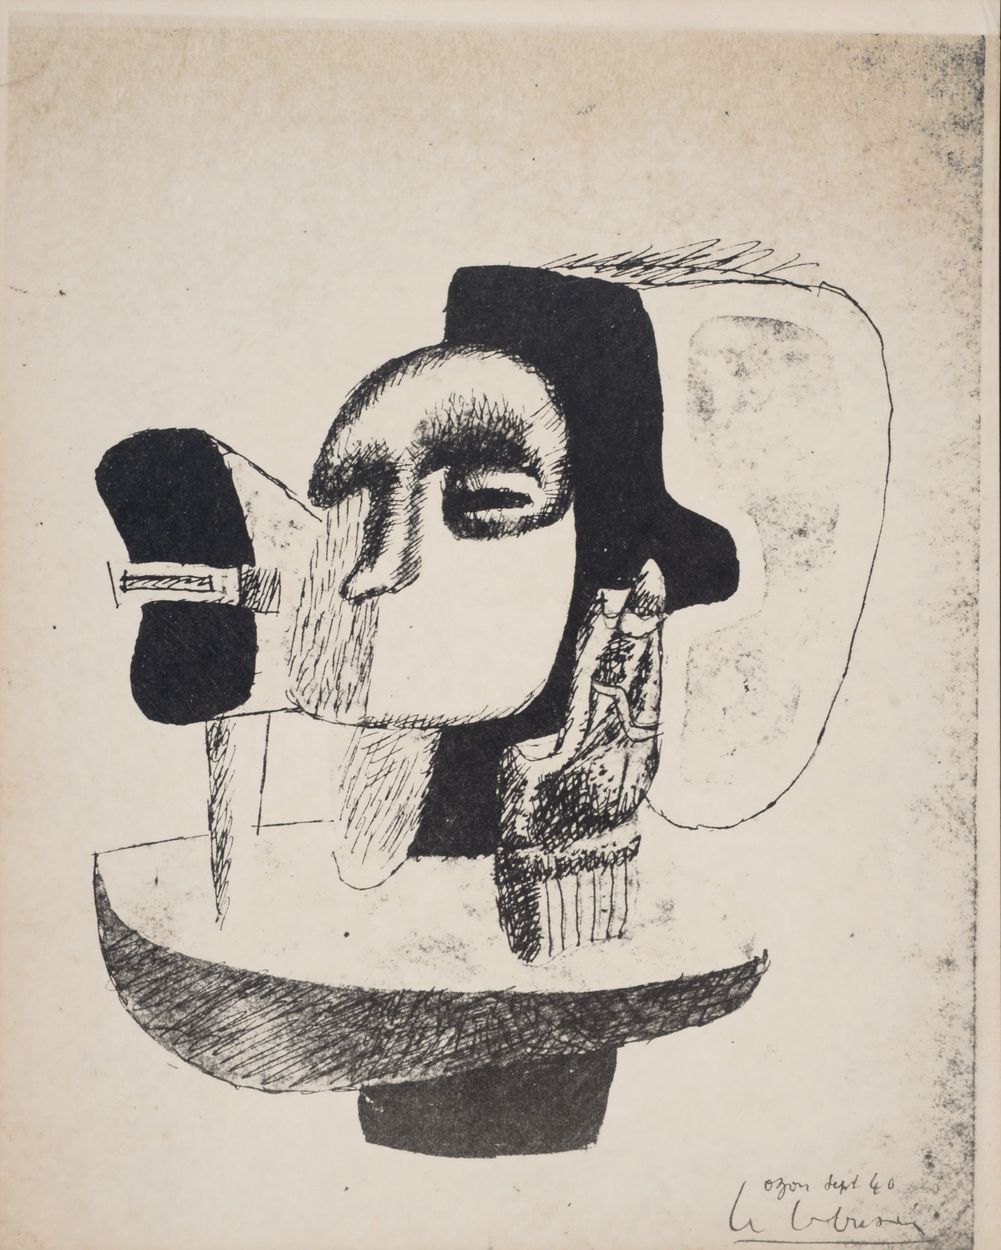 Le Corbusier Charles-Edouard Jeanneret (1887-1965)

Ozon, 1940

Xerografía sobre&hellip;